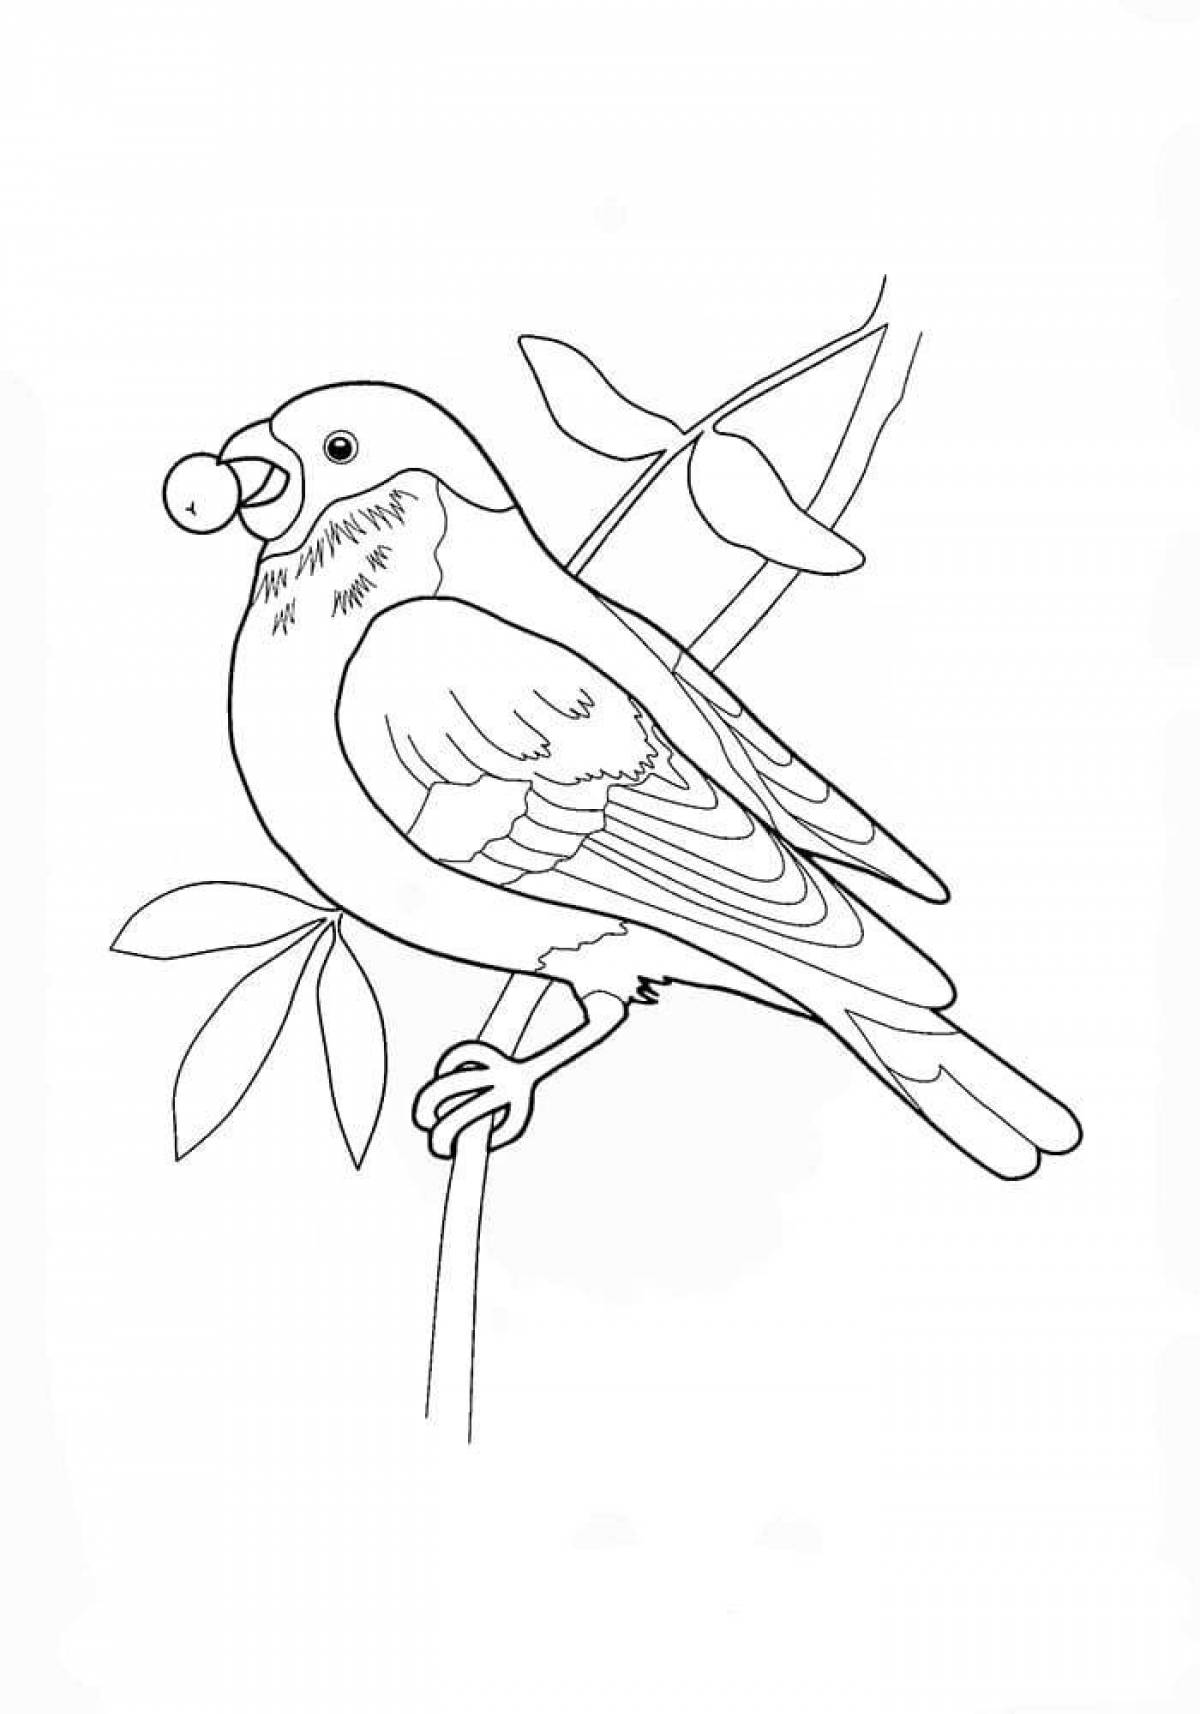 Bright drawing of a bullfinch